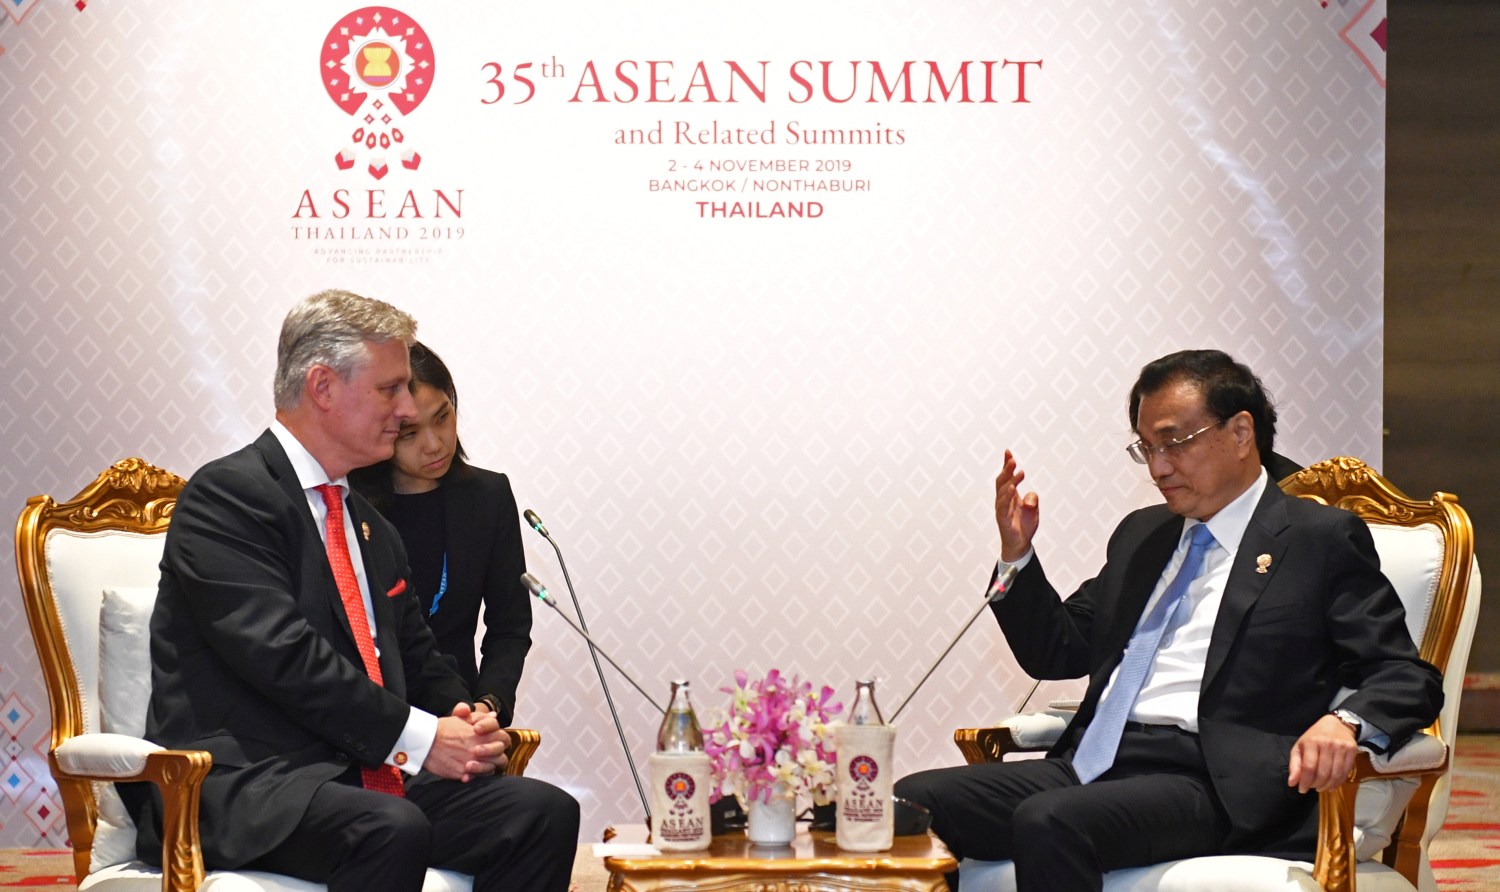 U.S. National Security Advisor Robert C. O'Brien and Chinese Premier Li Keqiang attend the East Asia Summit (EAS) in Bangkok, Thailand, November 4, 2019. REUTERS/Chalinee Thirasupa